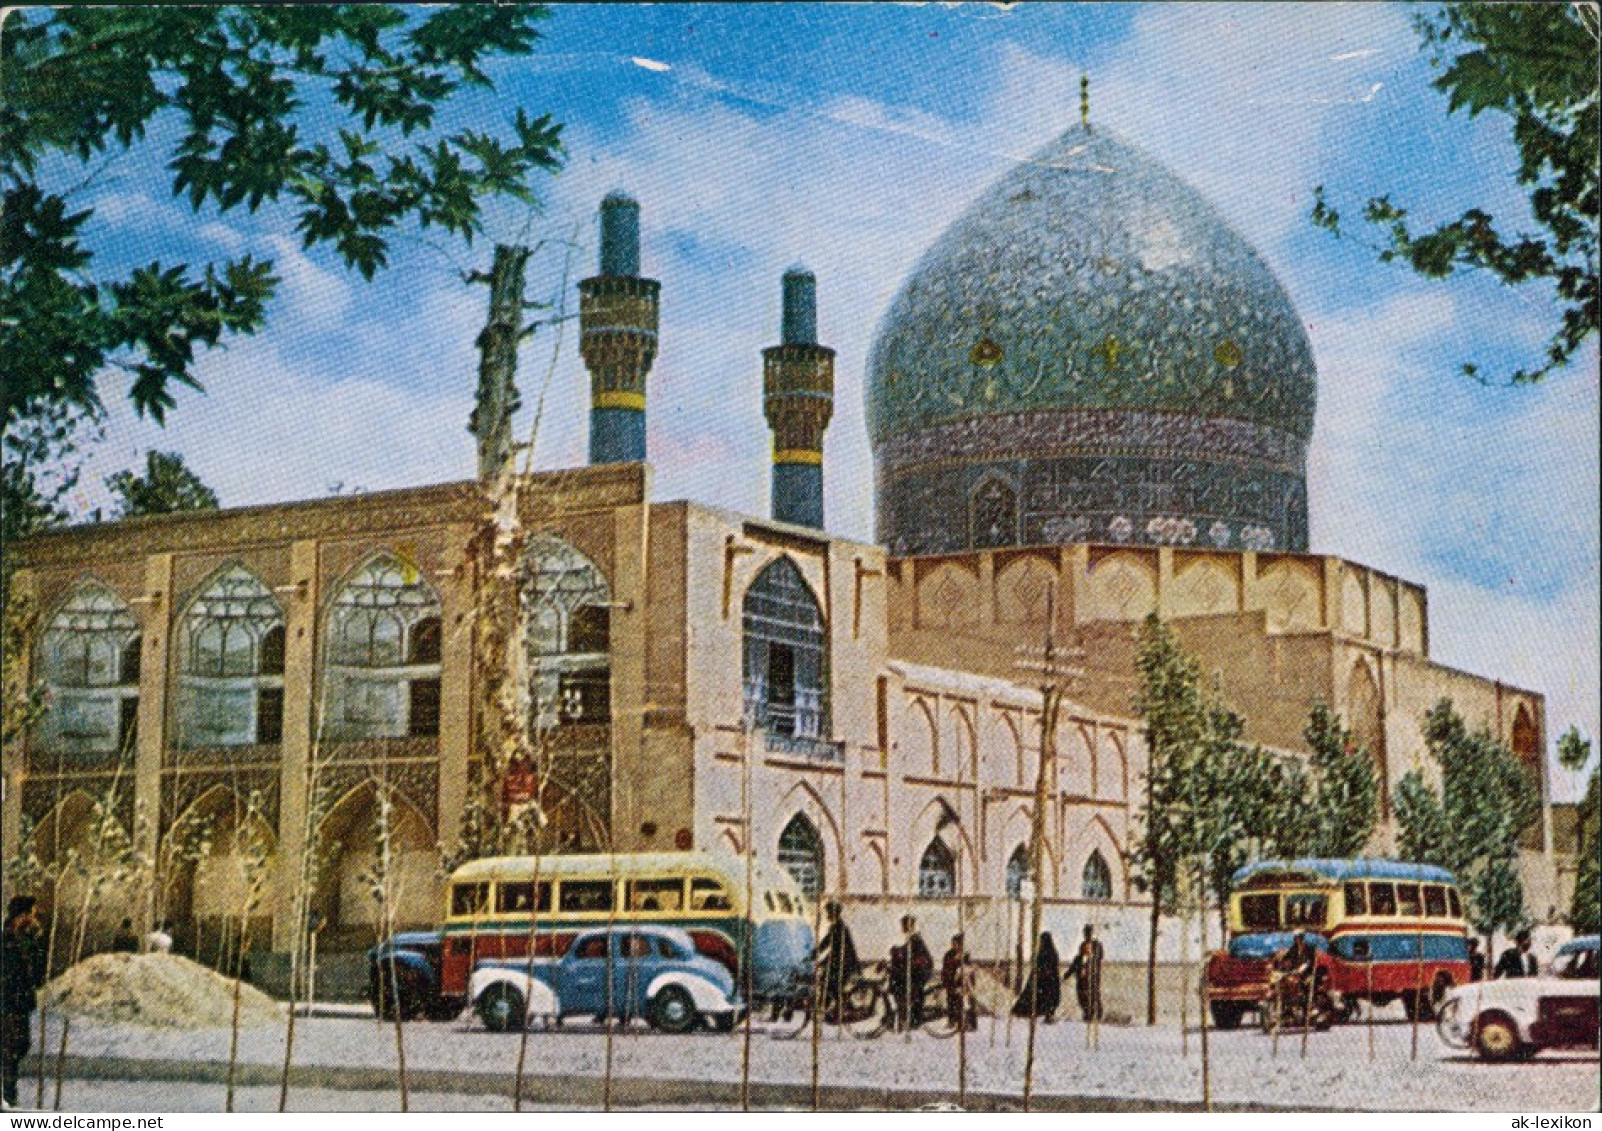 Teheran اصفهان - مدرسه چهار باغ Isfahan-Chahar Bage Mosque 1981 - Iran